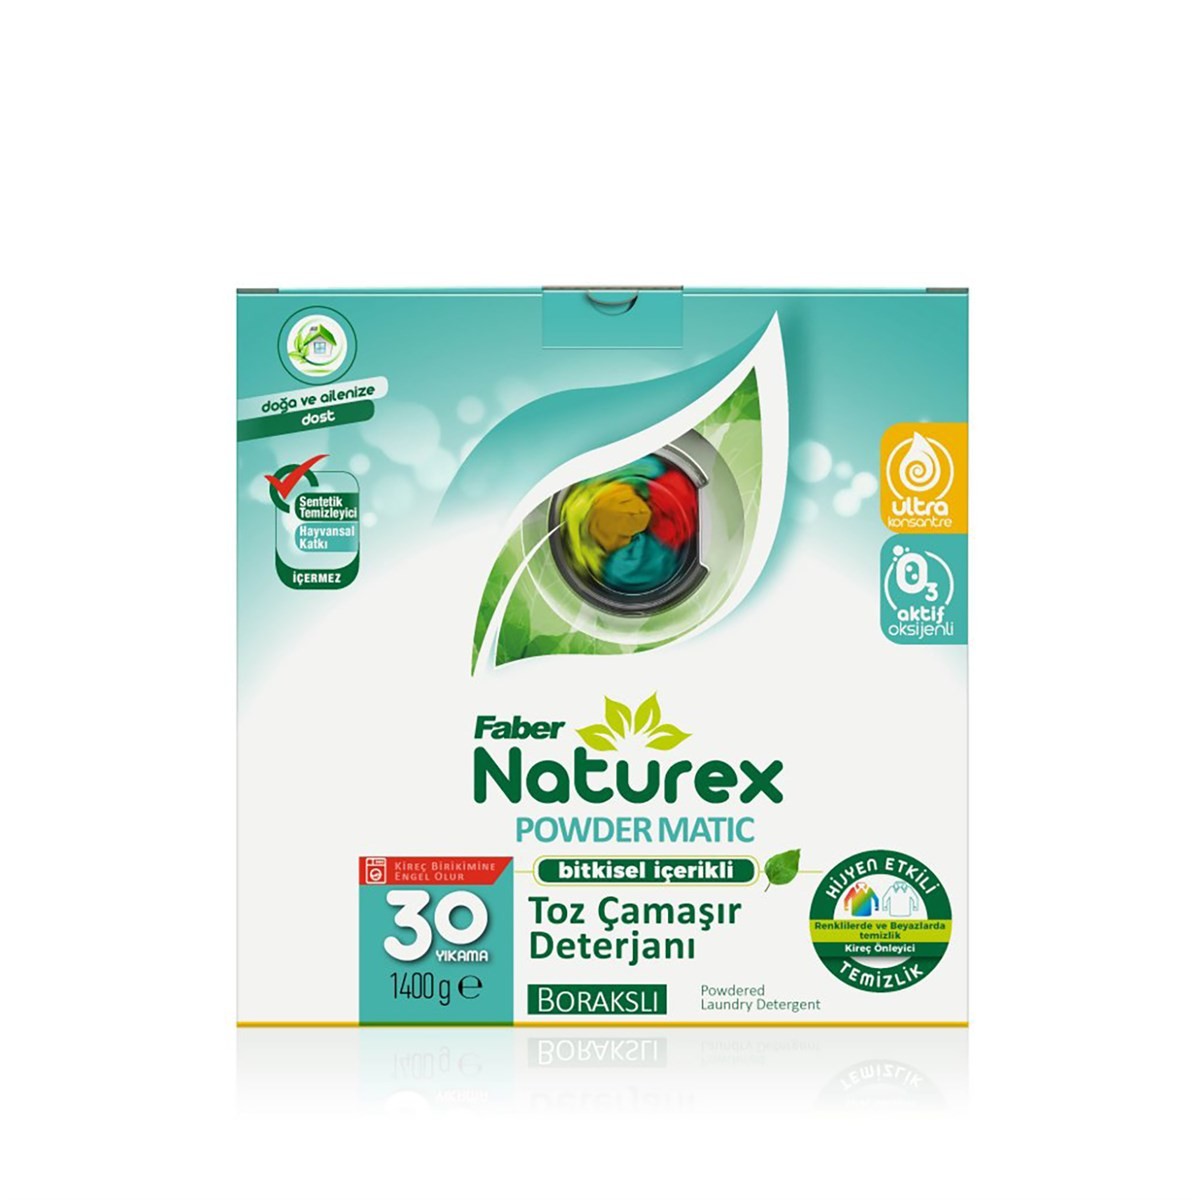 Faber Naturex - Bitkisel İçerikli Toz Çamaşır Deterjanı - Powder Matic - 1.4 Kg Kutu